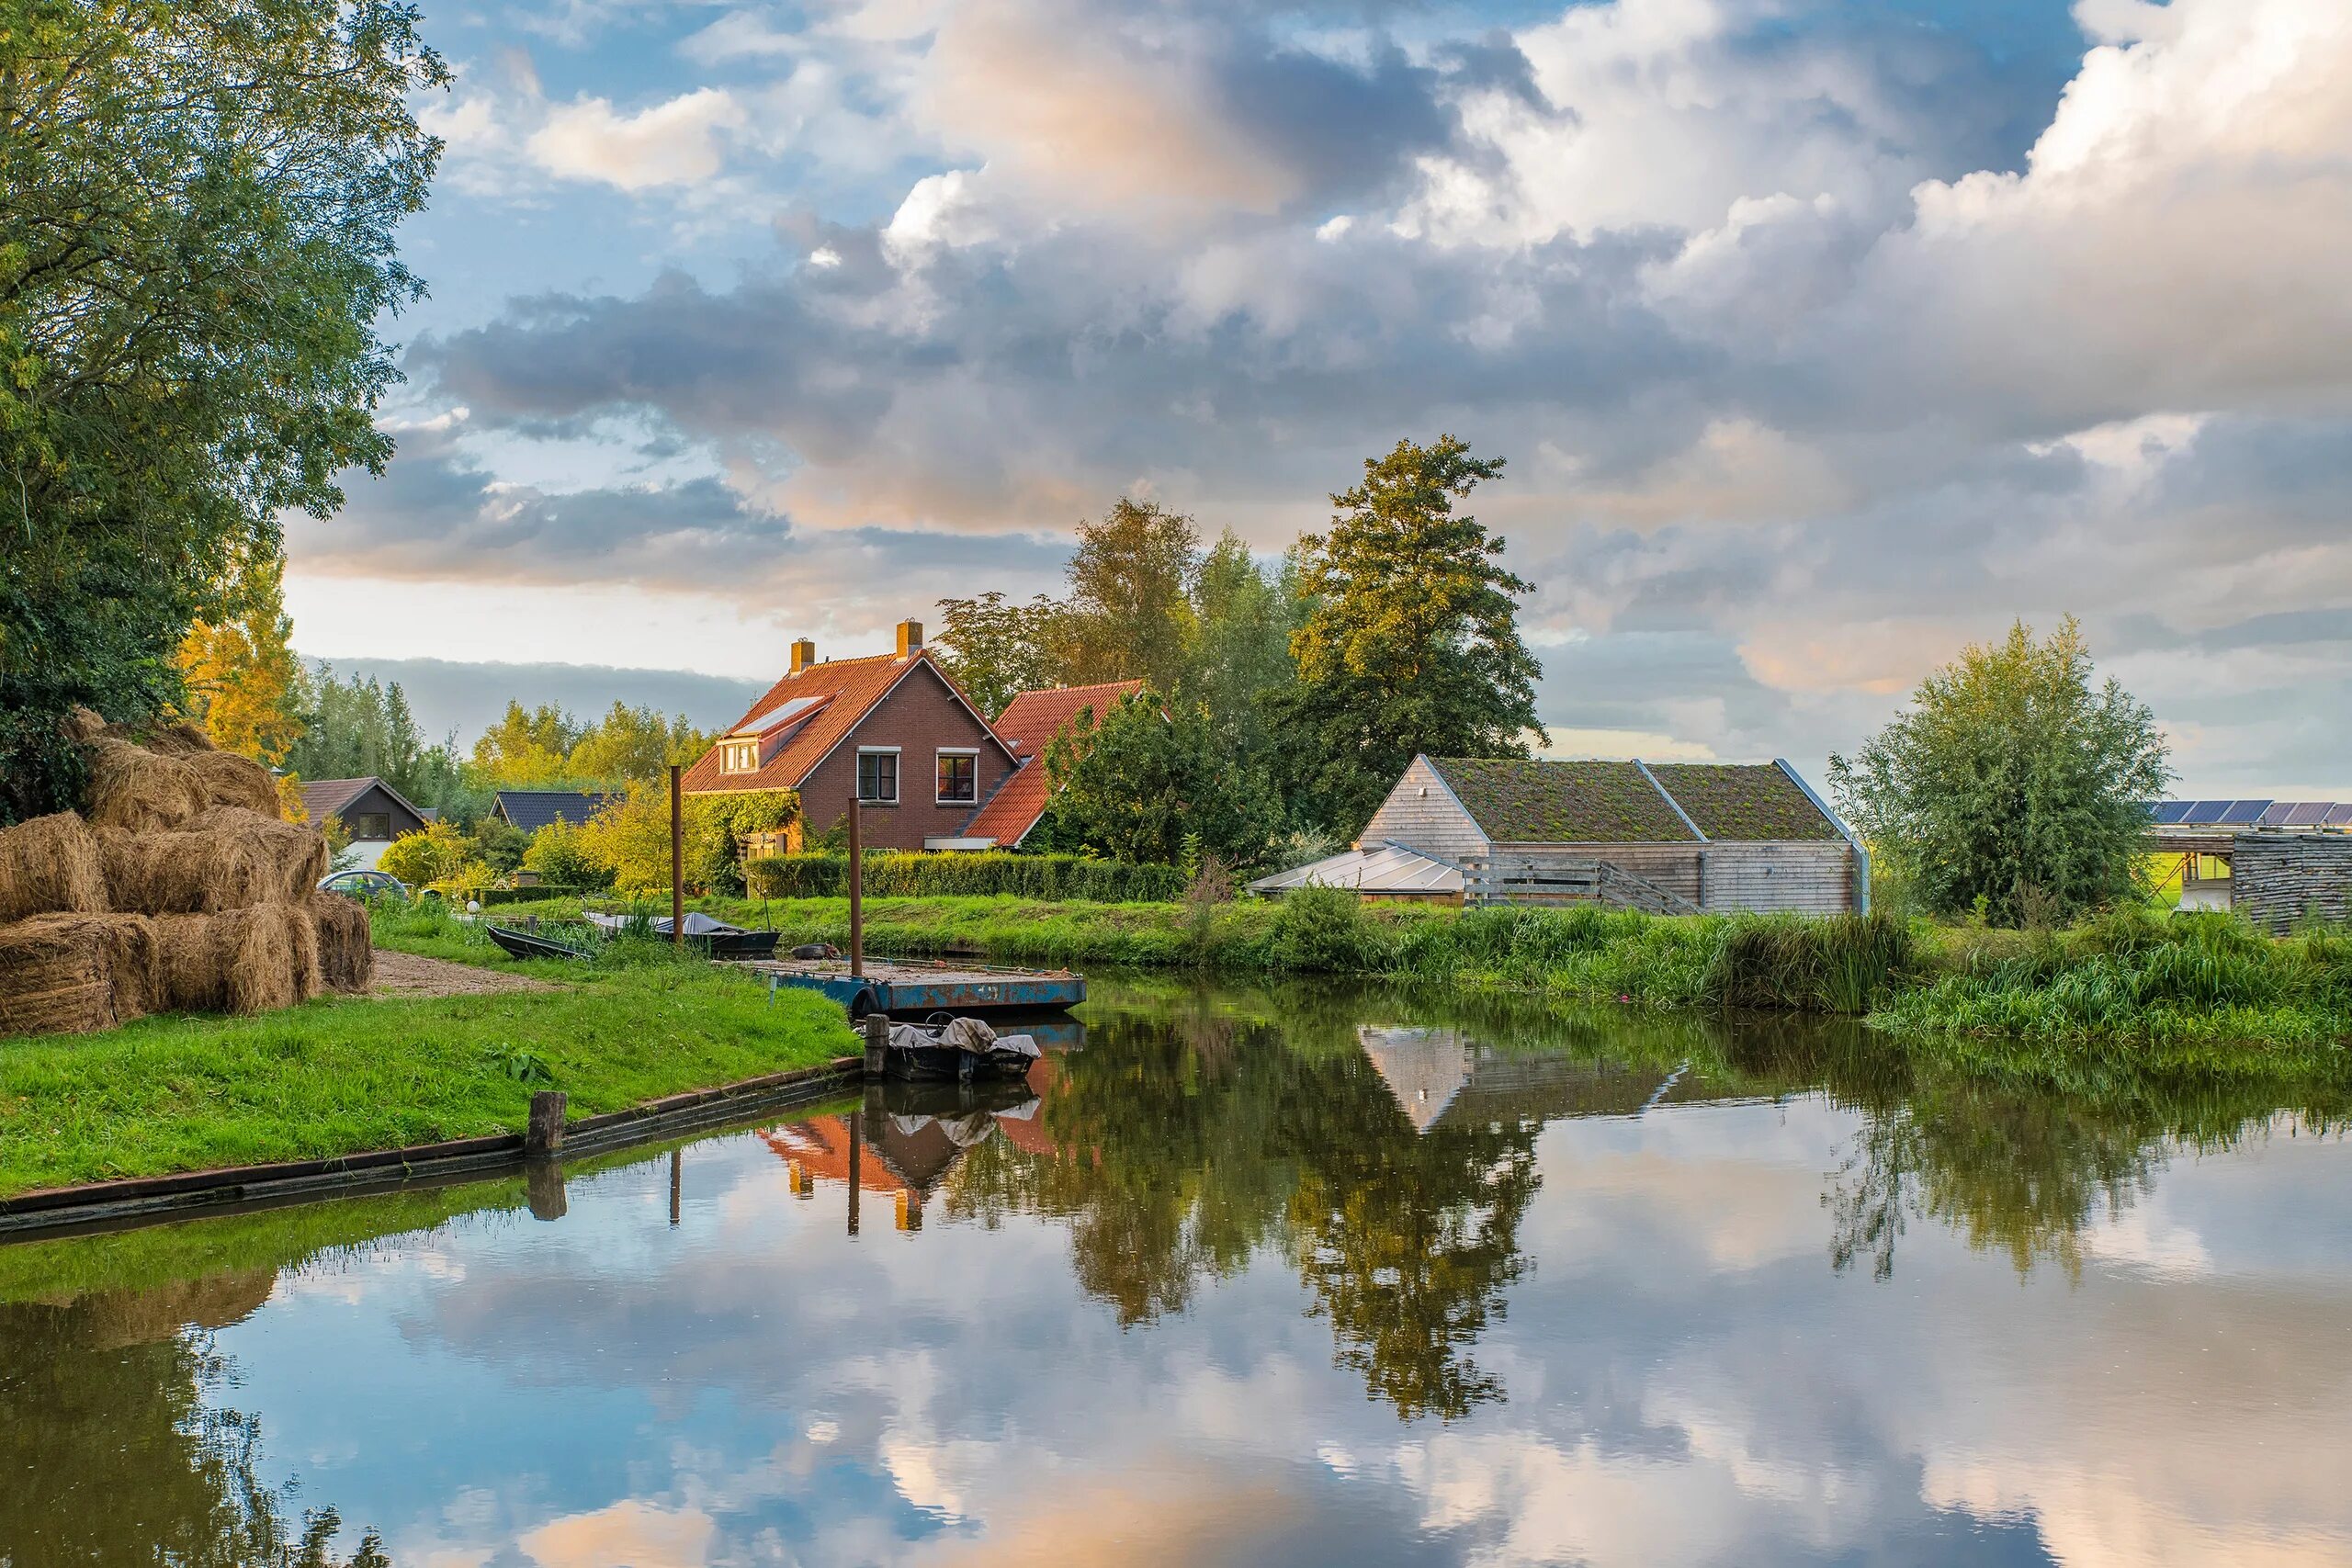 Домик в деревне у реки. Нидерланды природа. Обои домик у реки. Нидерланды фото природы. Картинка на рабочий стол деревня